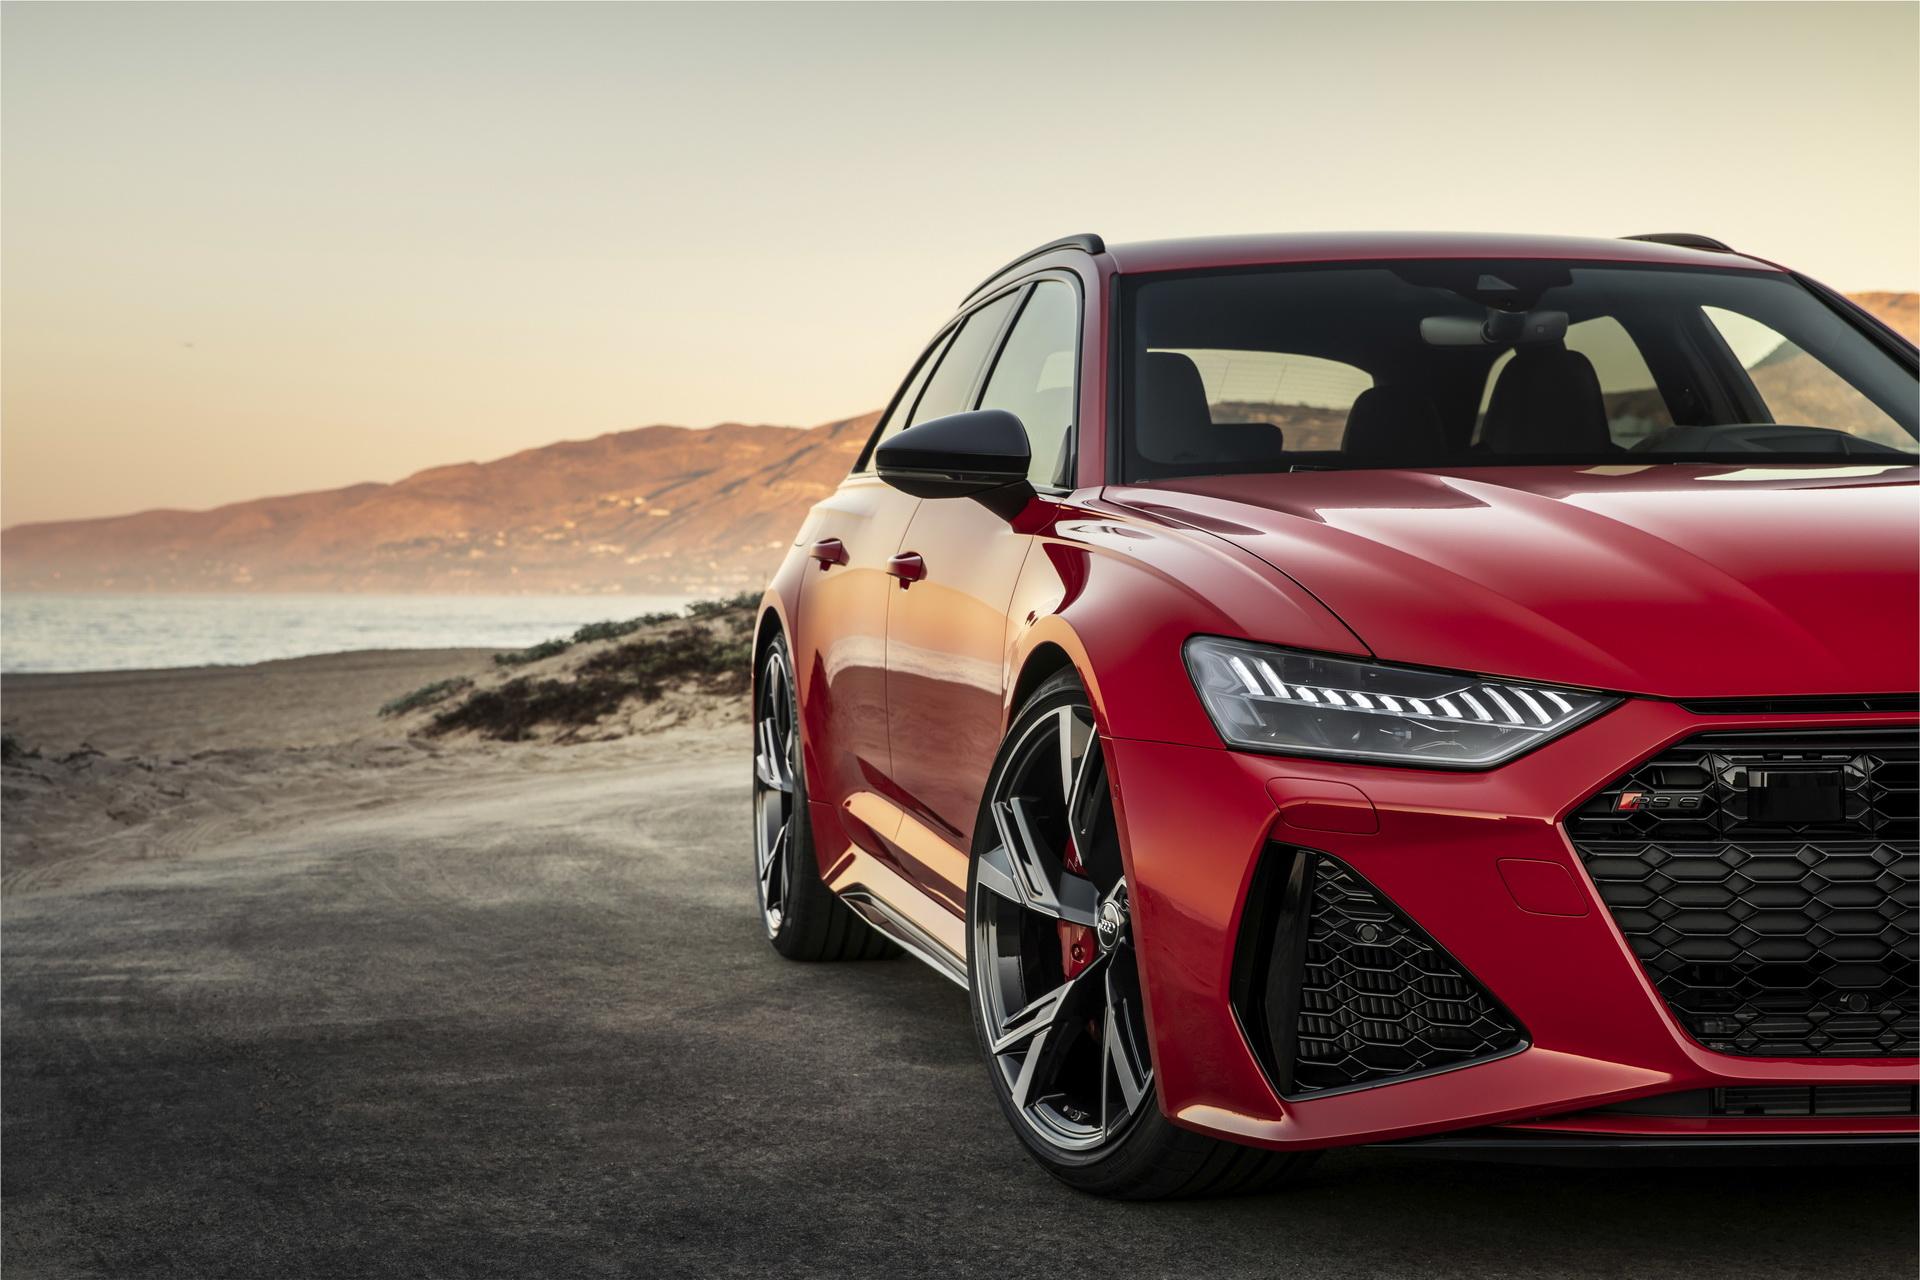 Audi RS6 Avant Looks Simply Spectacular Under The California